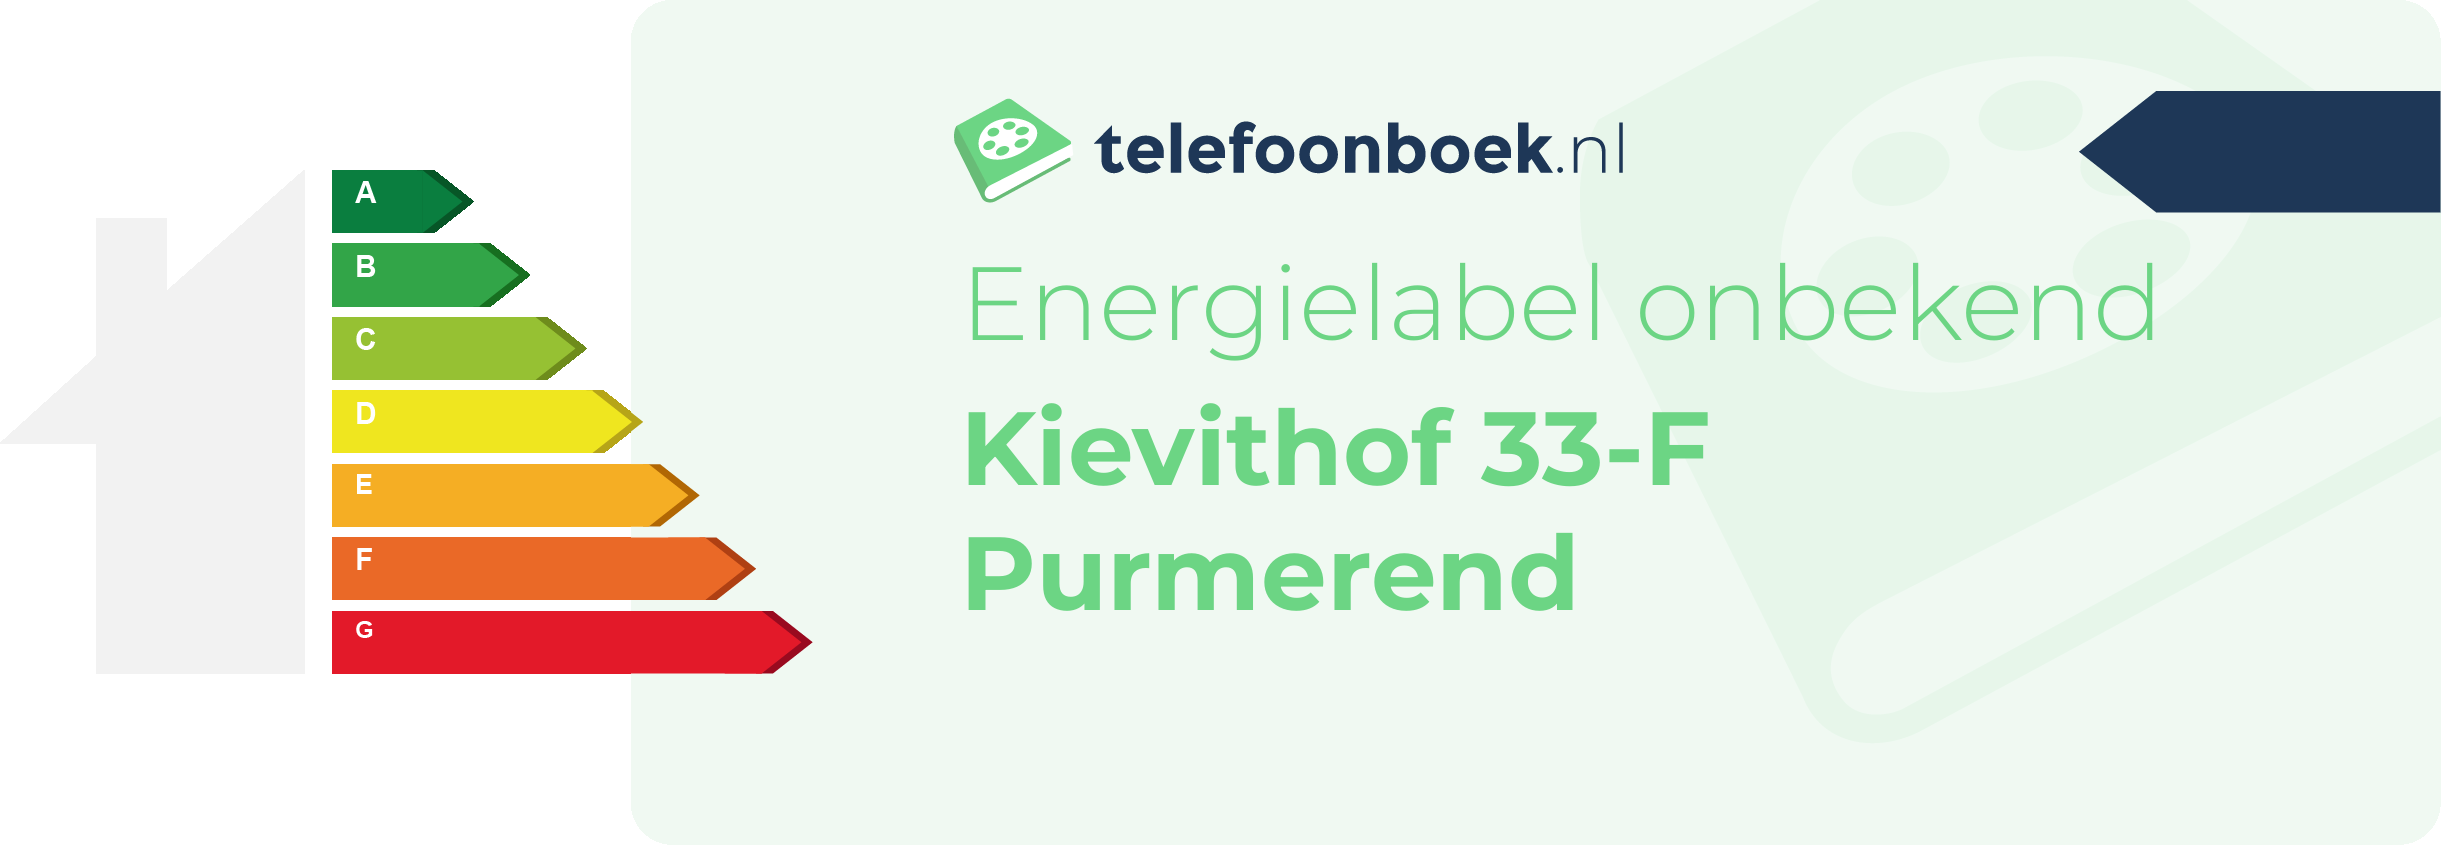 Energielabel Kievithof 33-F Purmerend